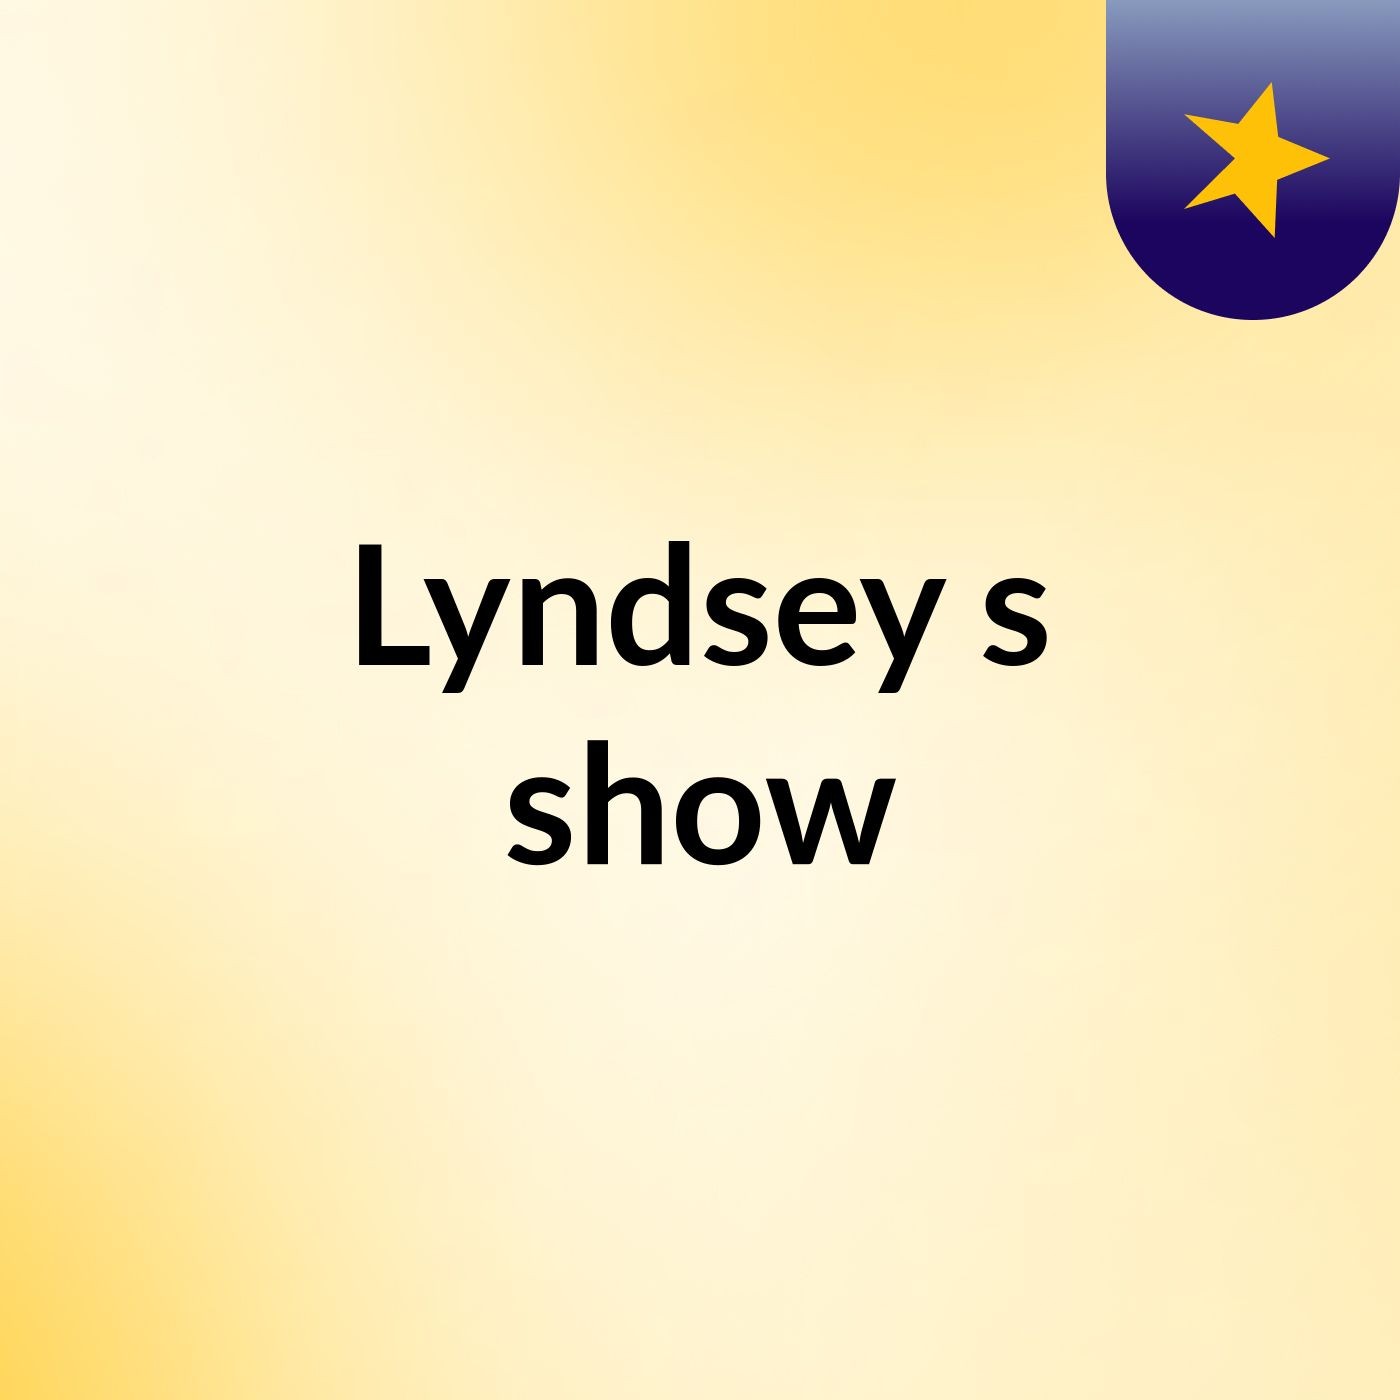 Lyndsey's show